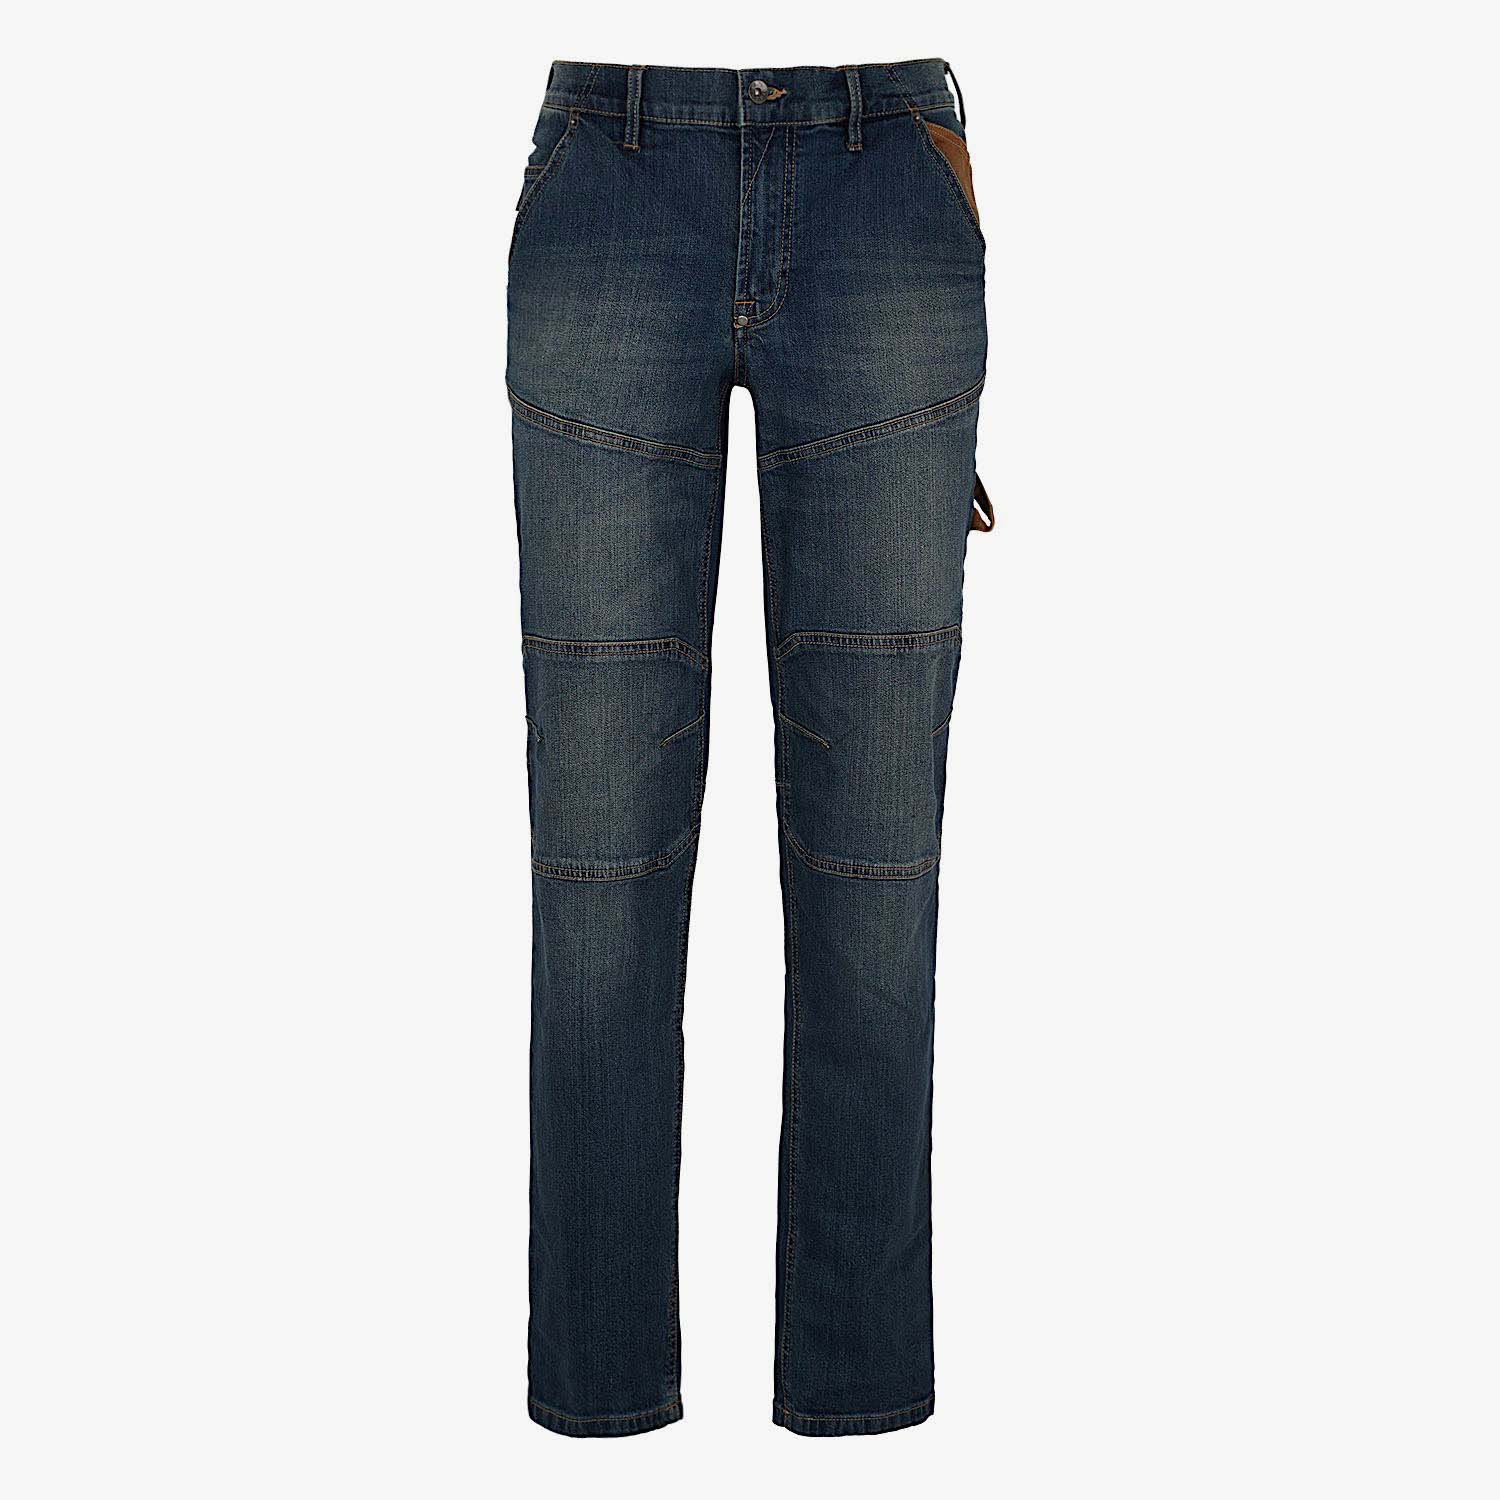 702.170752-pantaloni-da-lavoro-stone-plus-diadora-jeans